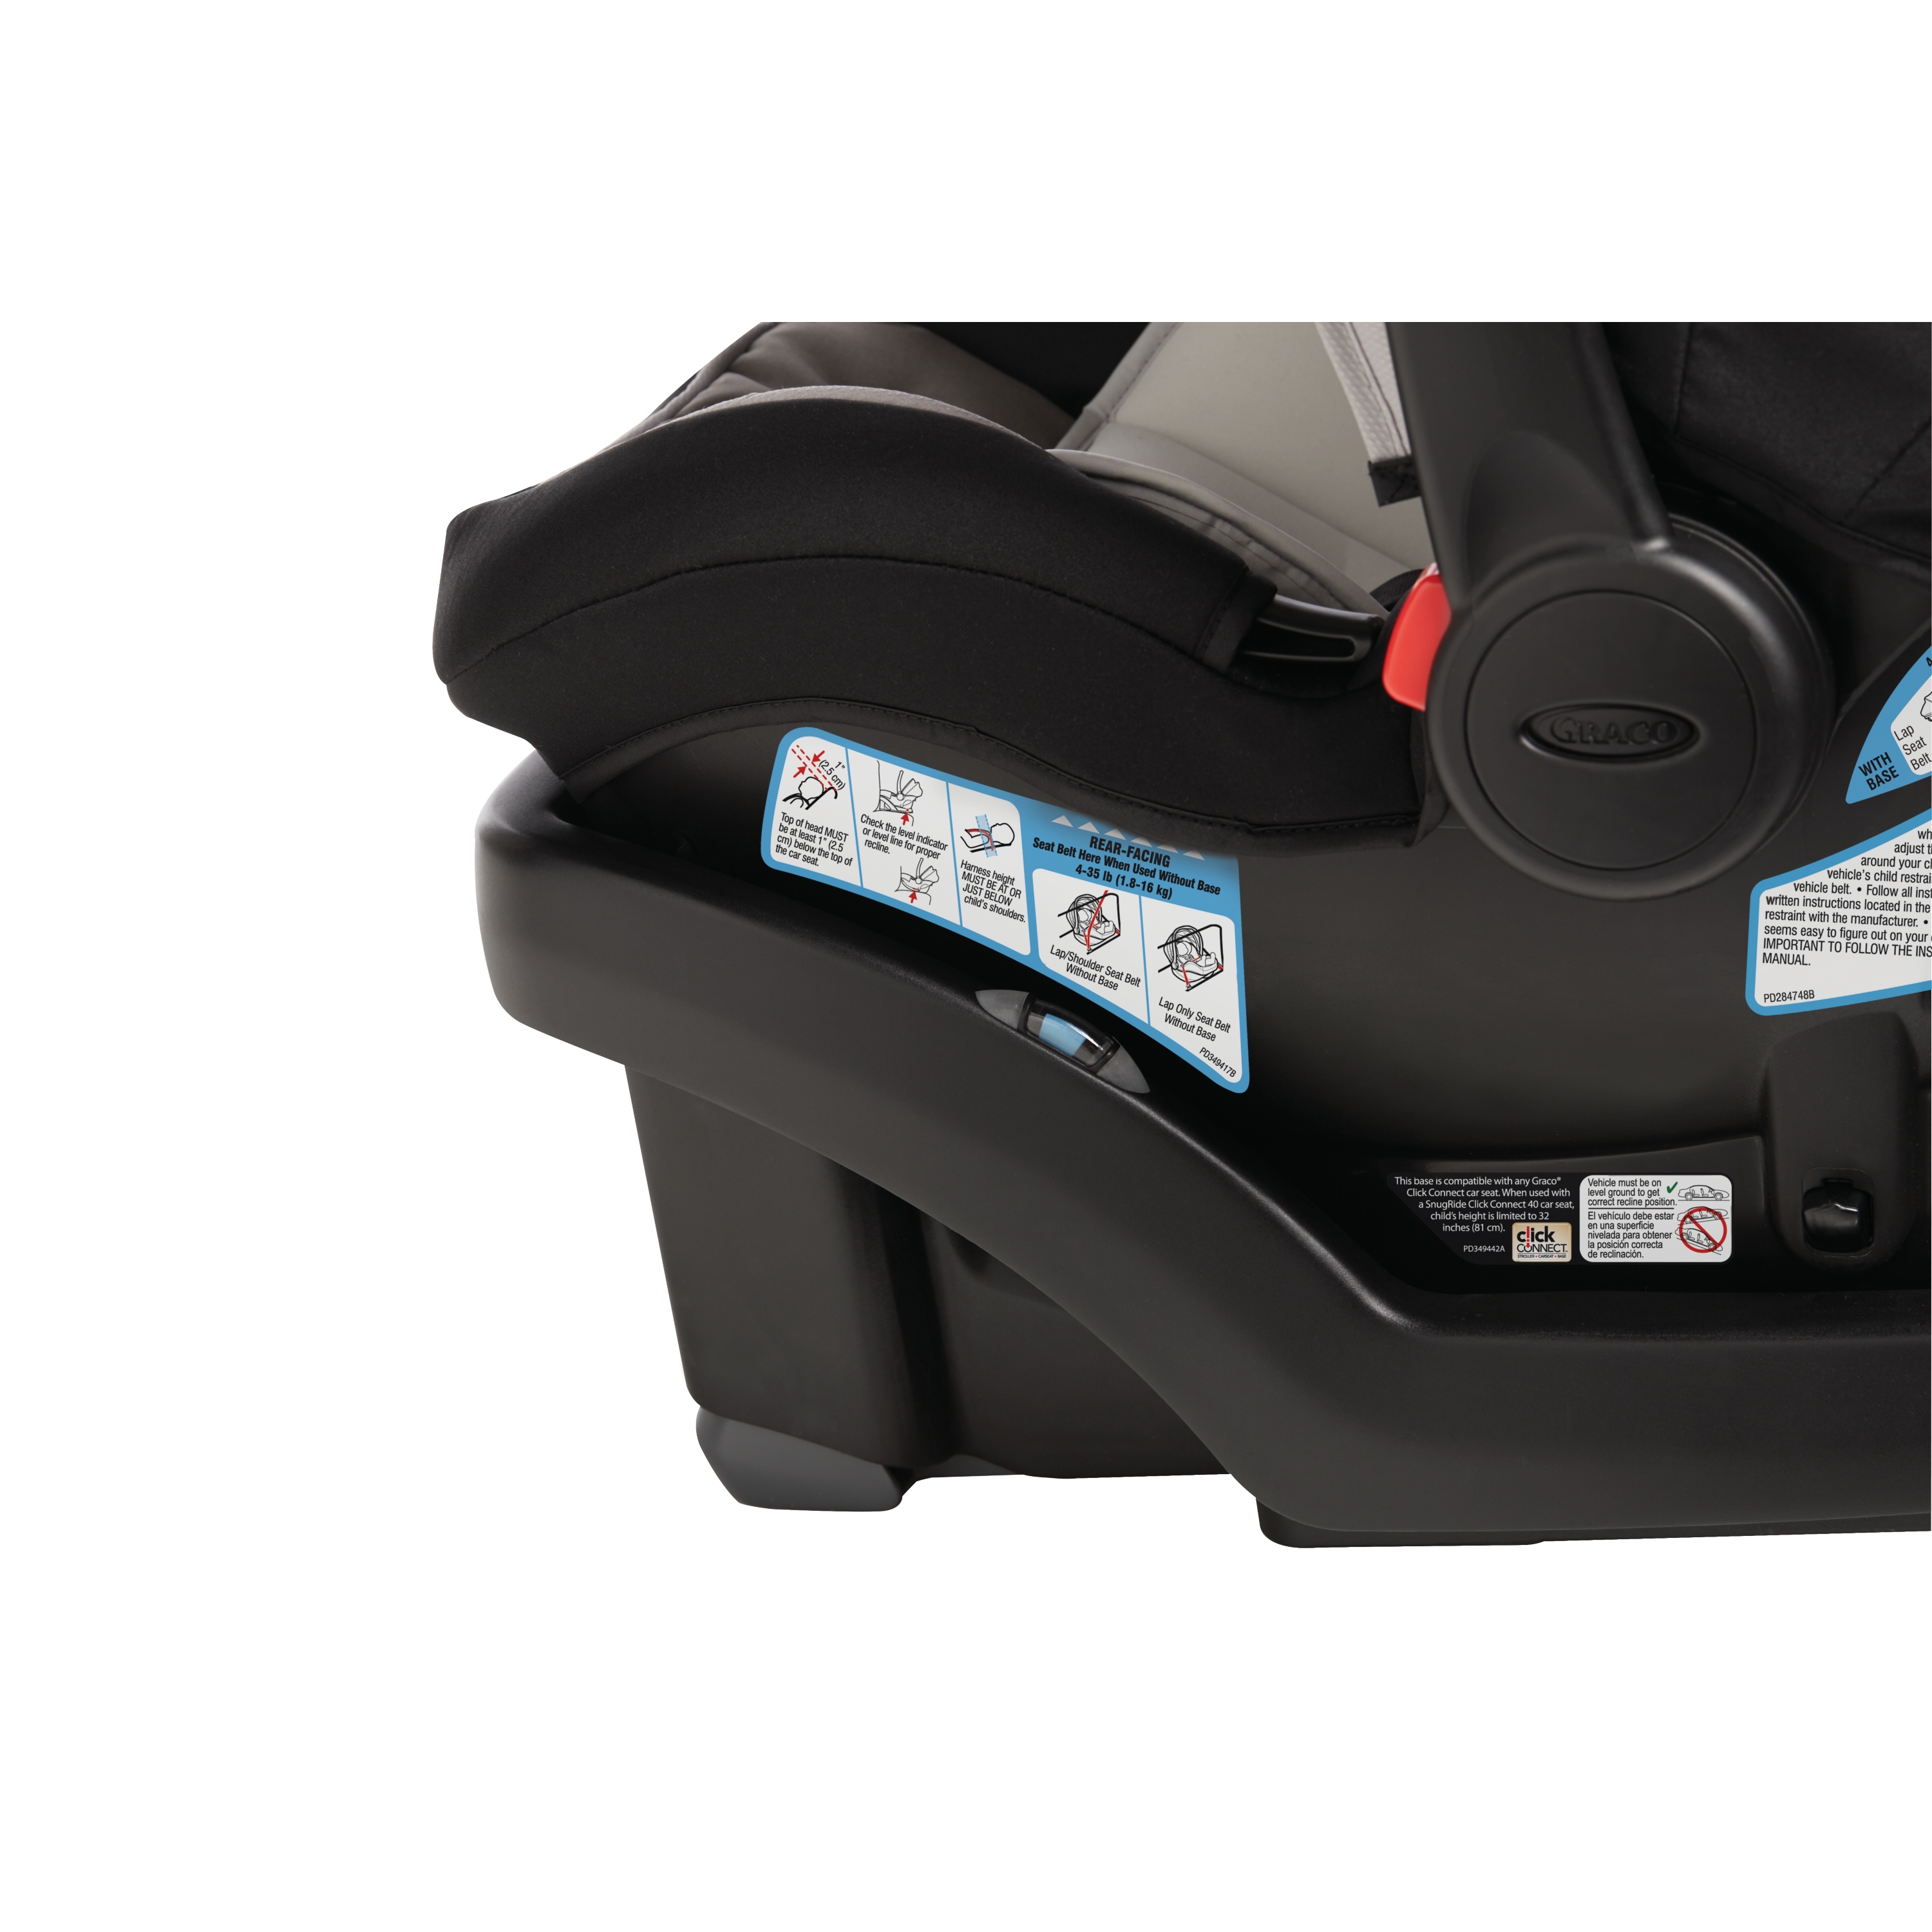 Graco SnugRide SnugLock Infant Car Seat Base - image 3 of 5